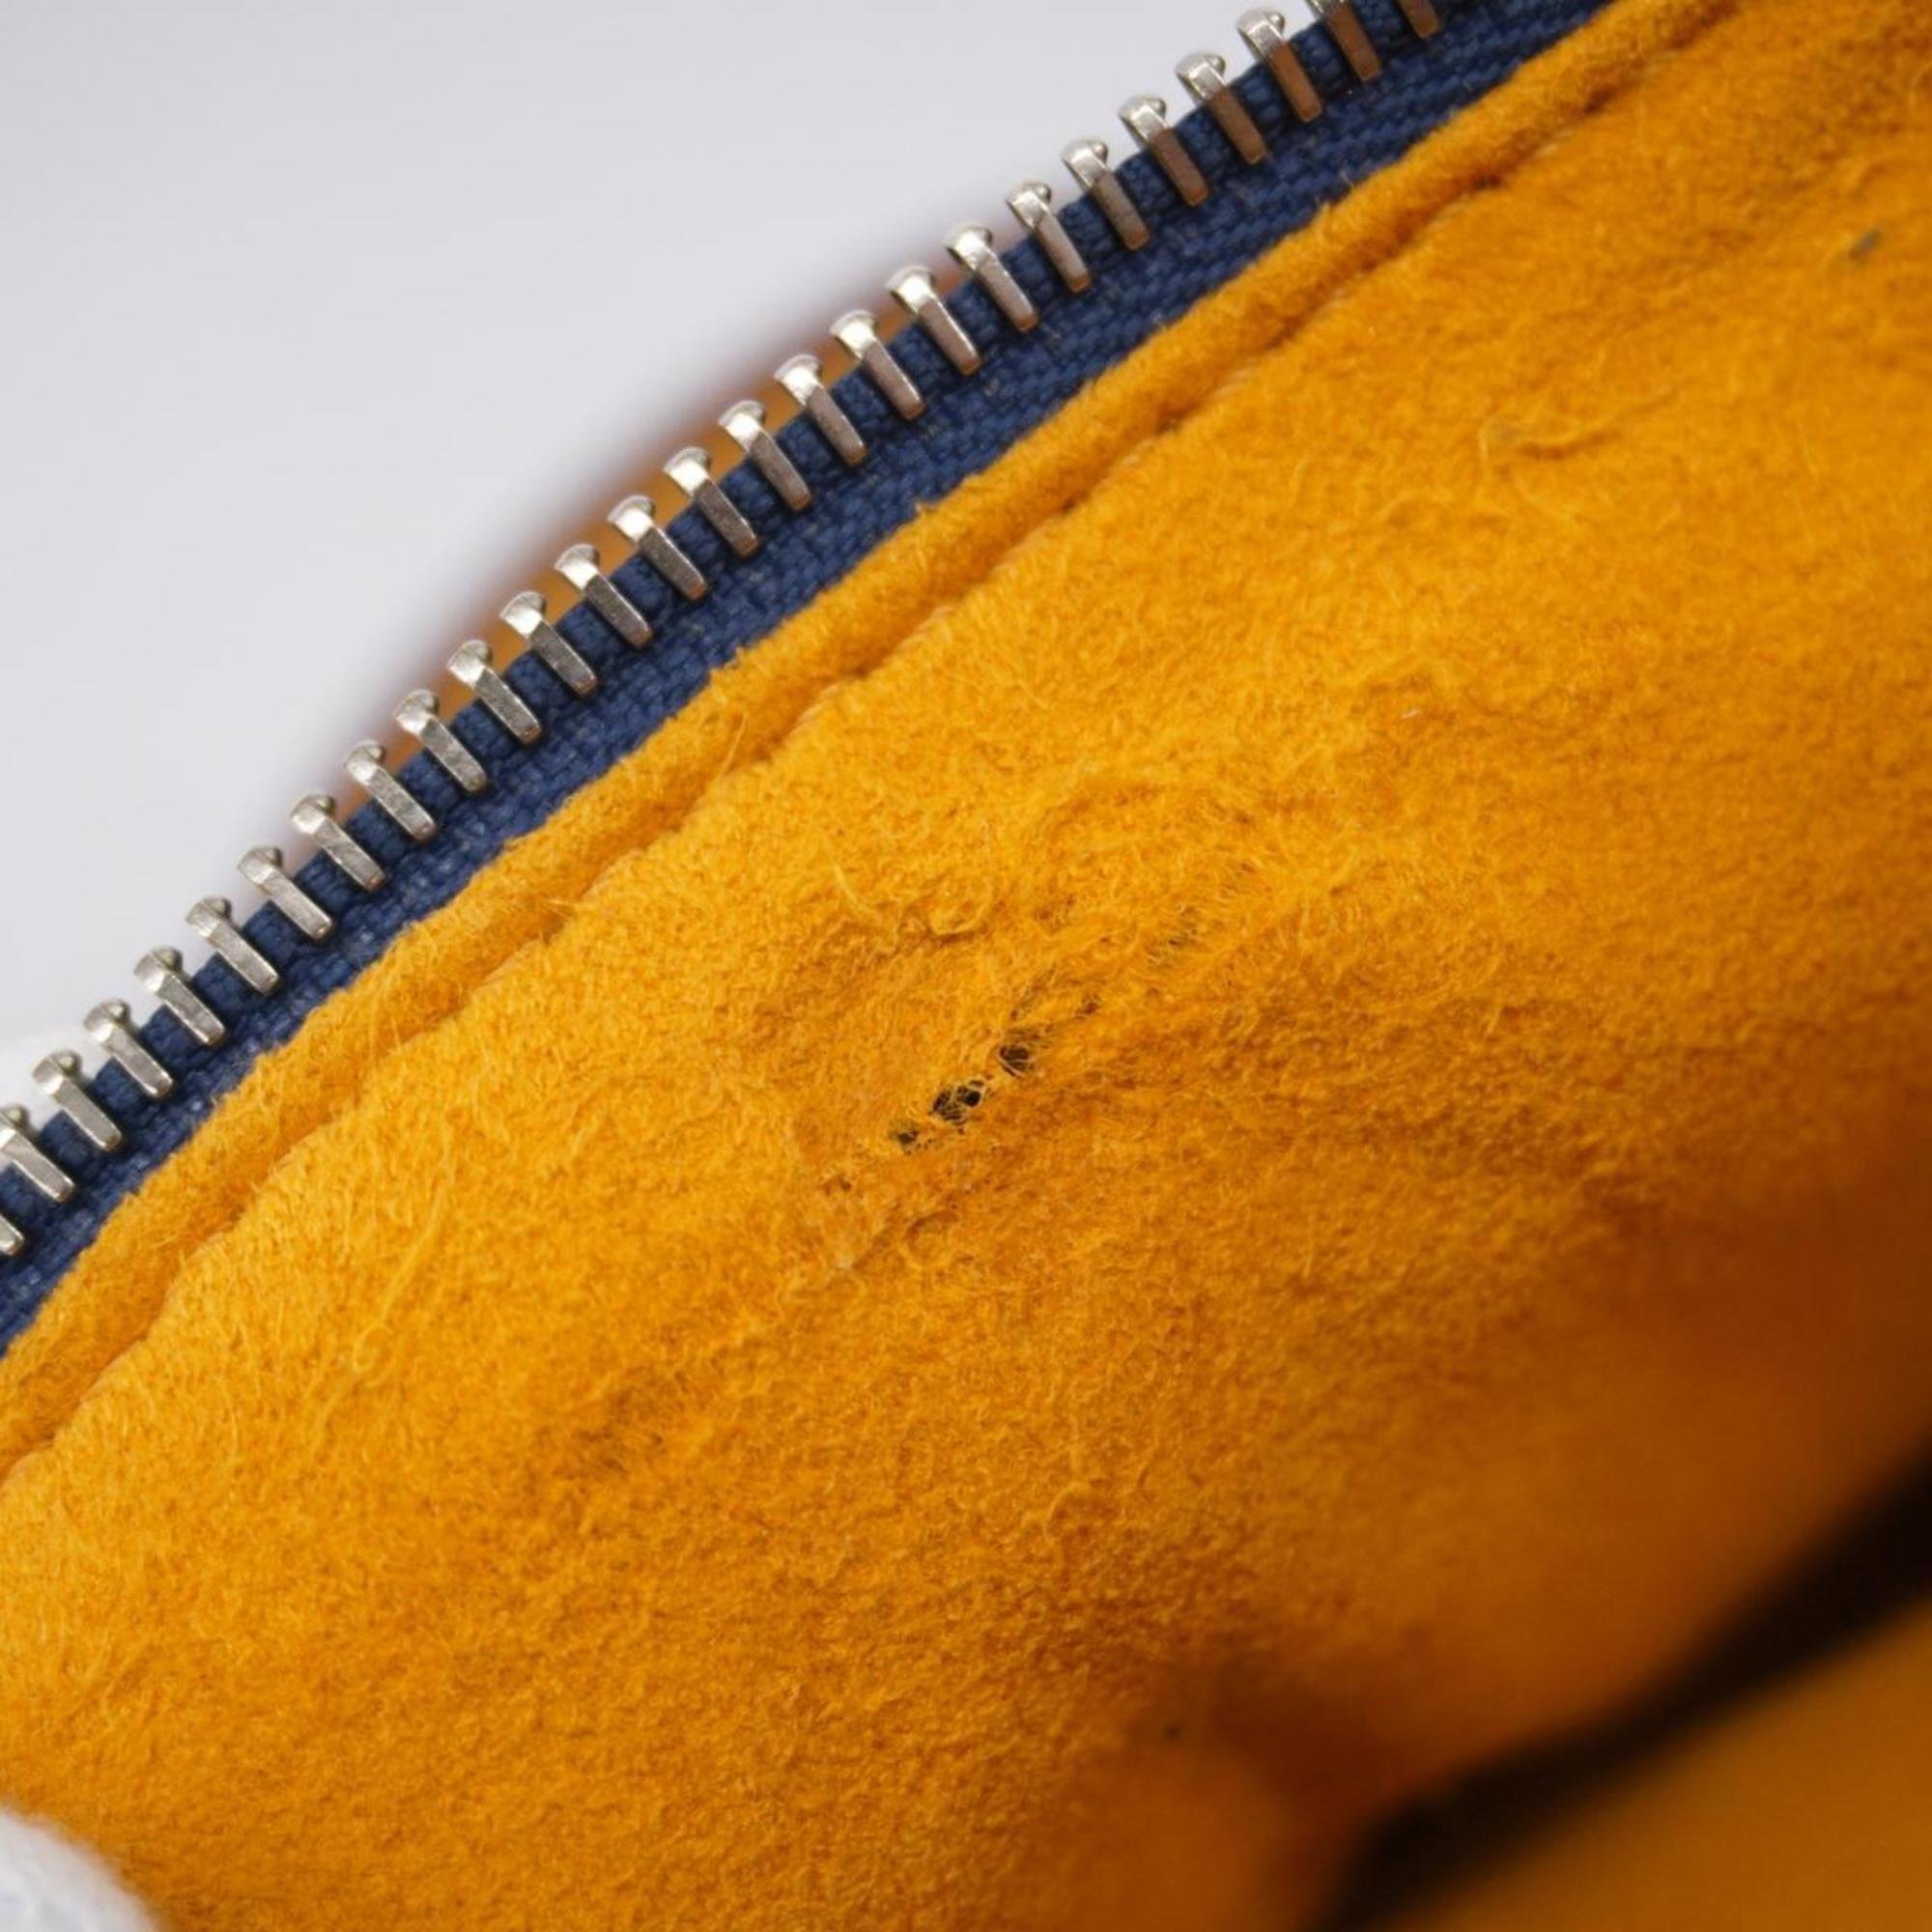 Louis Vuitton Handbag Monogram Denim Neo Speedy M95019 Blue Ladies